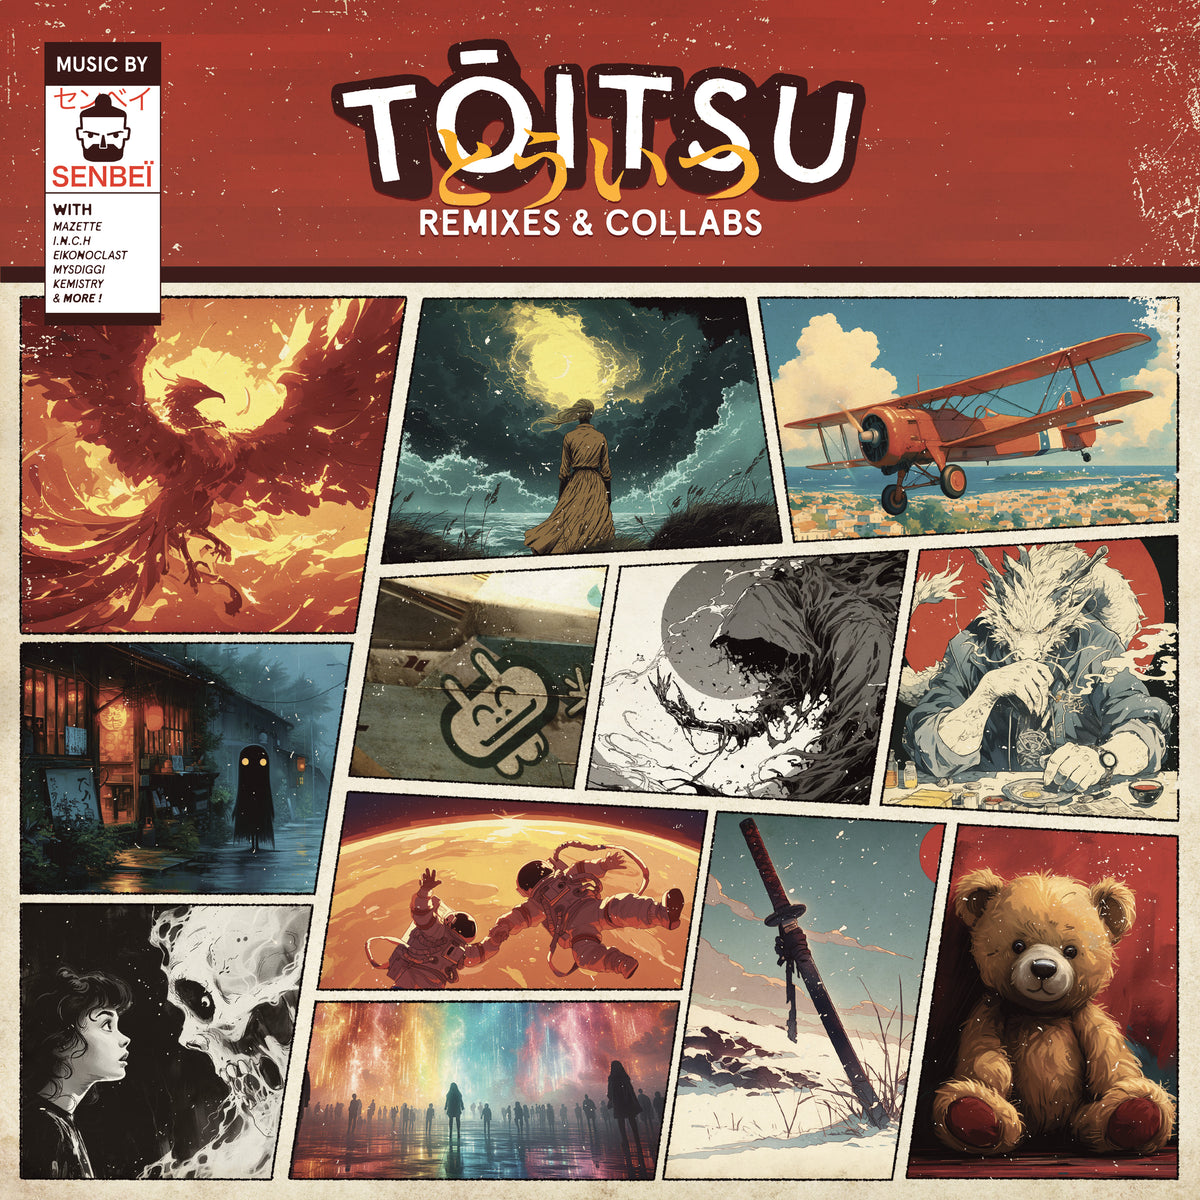 Toitsu Remixes & Collabs